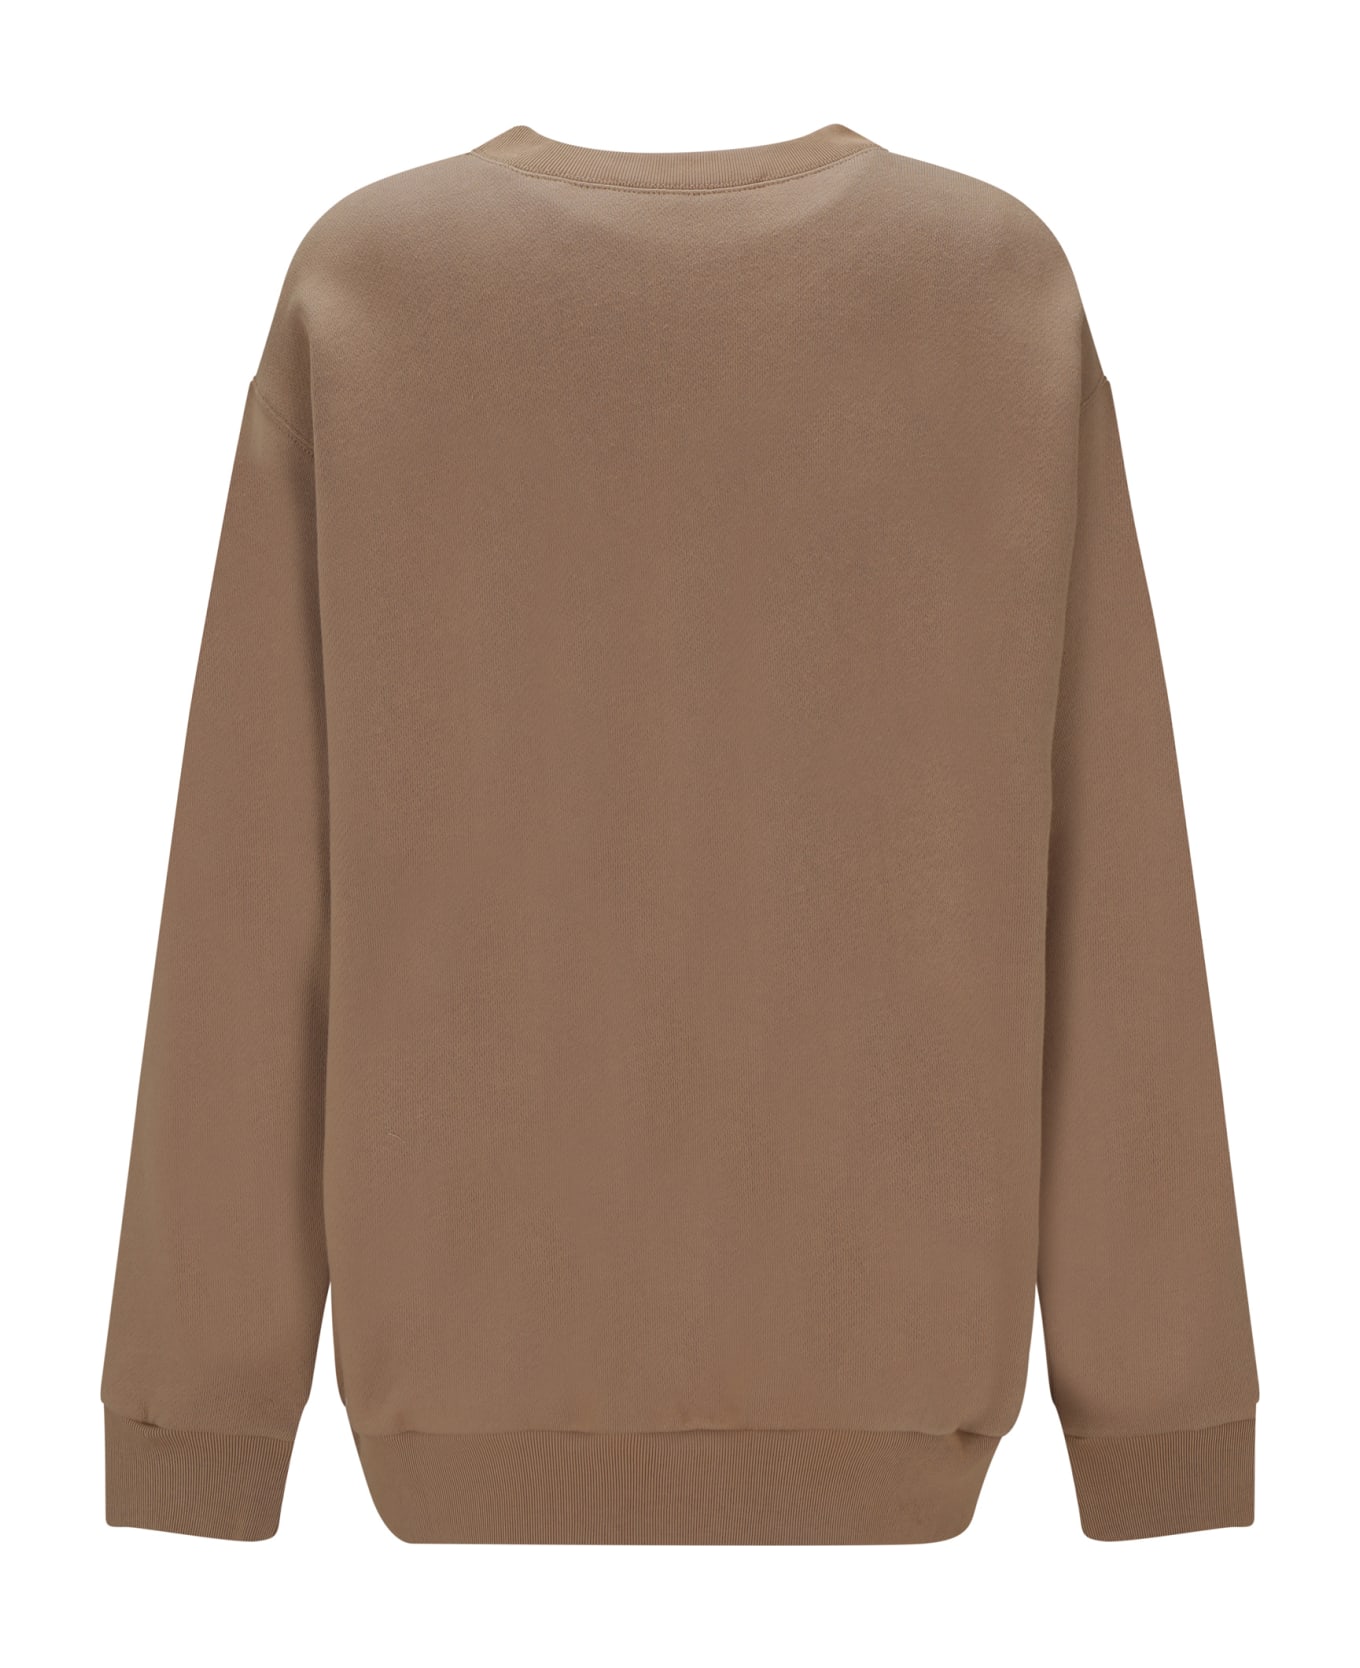 Gucci Sweatshirt - Camel